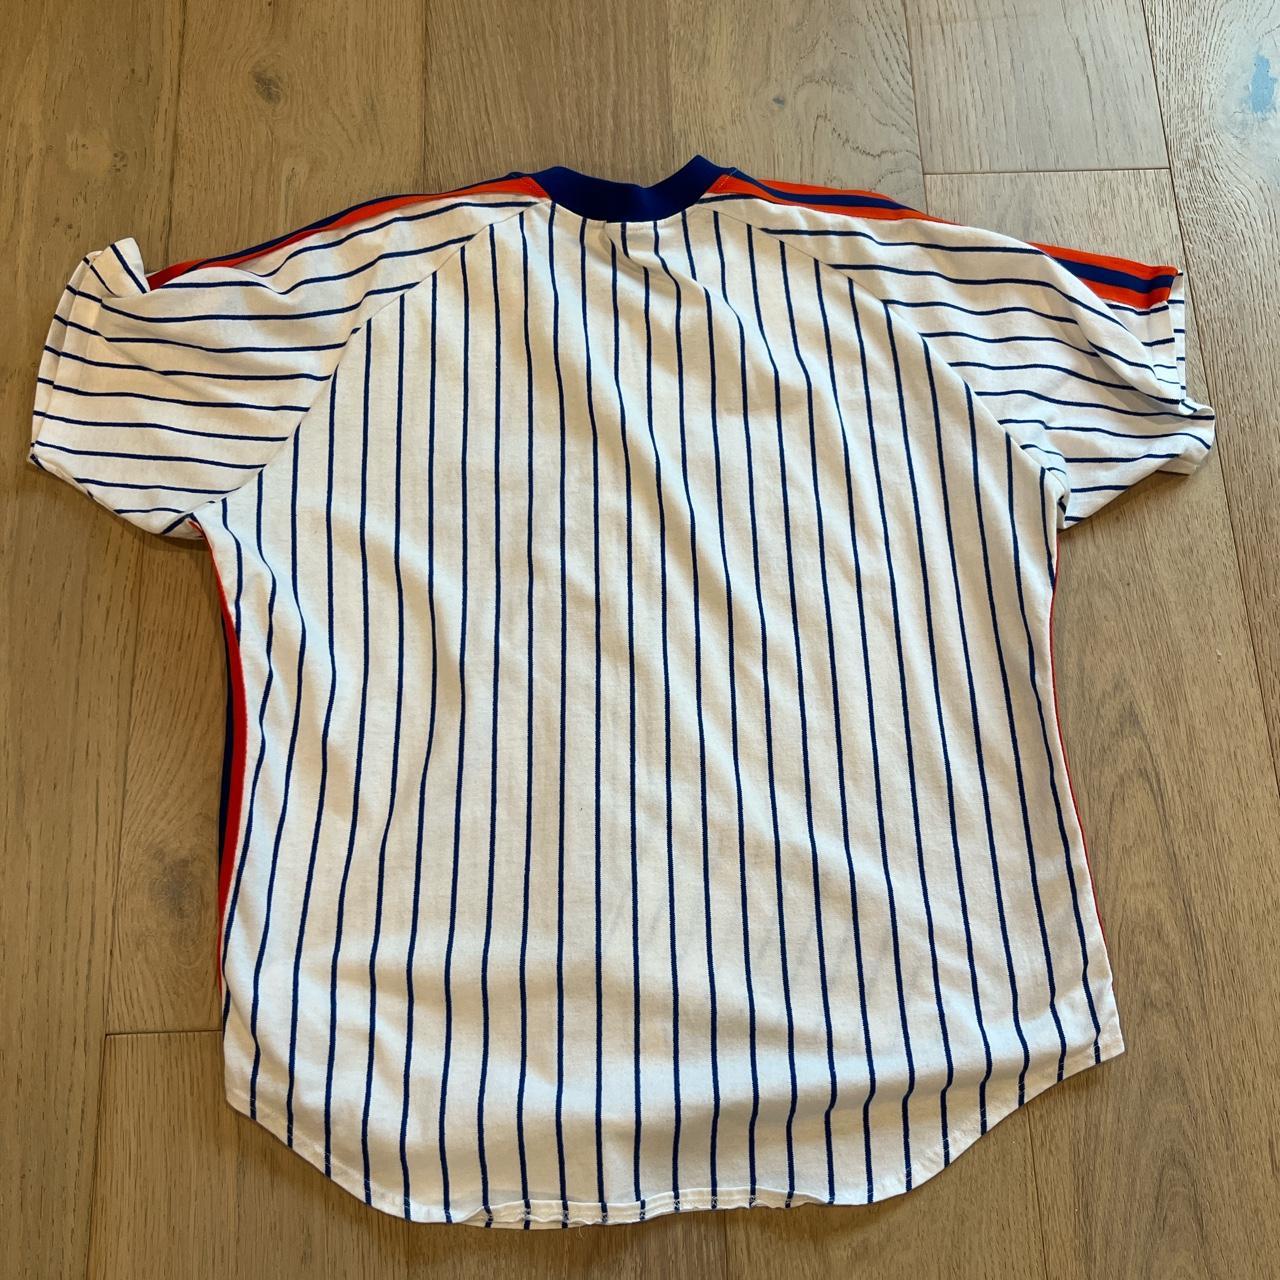 New York Mets vintage style fresh mesh-like jersey - Depop